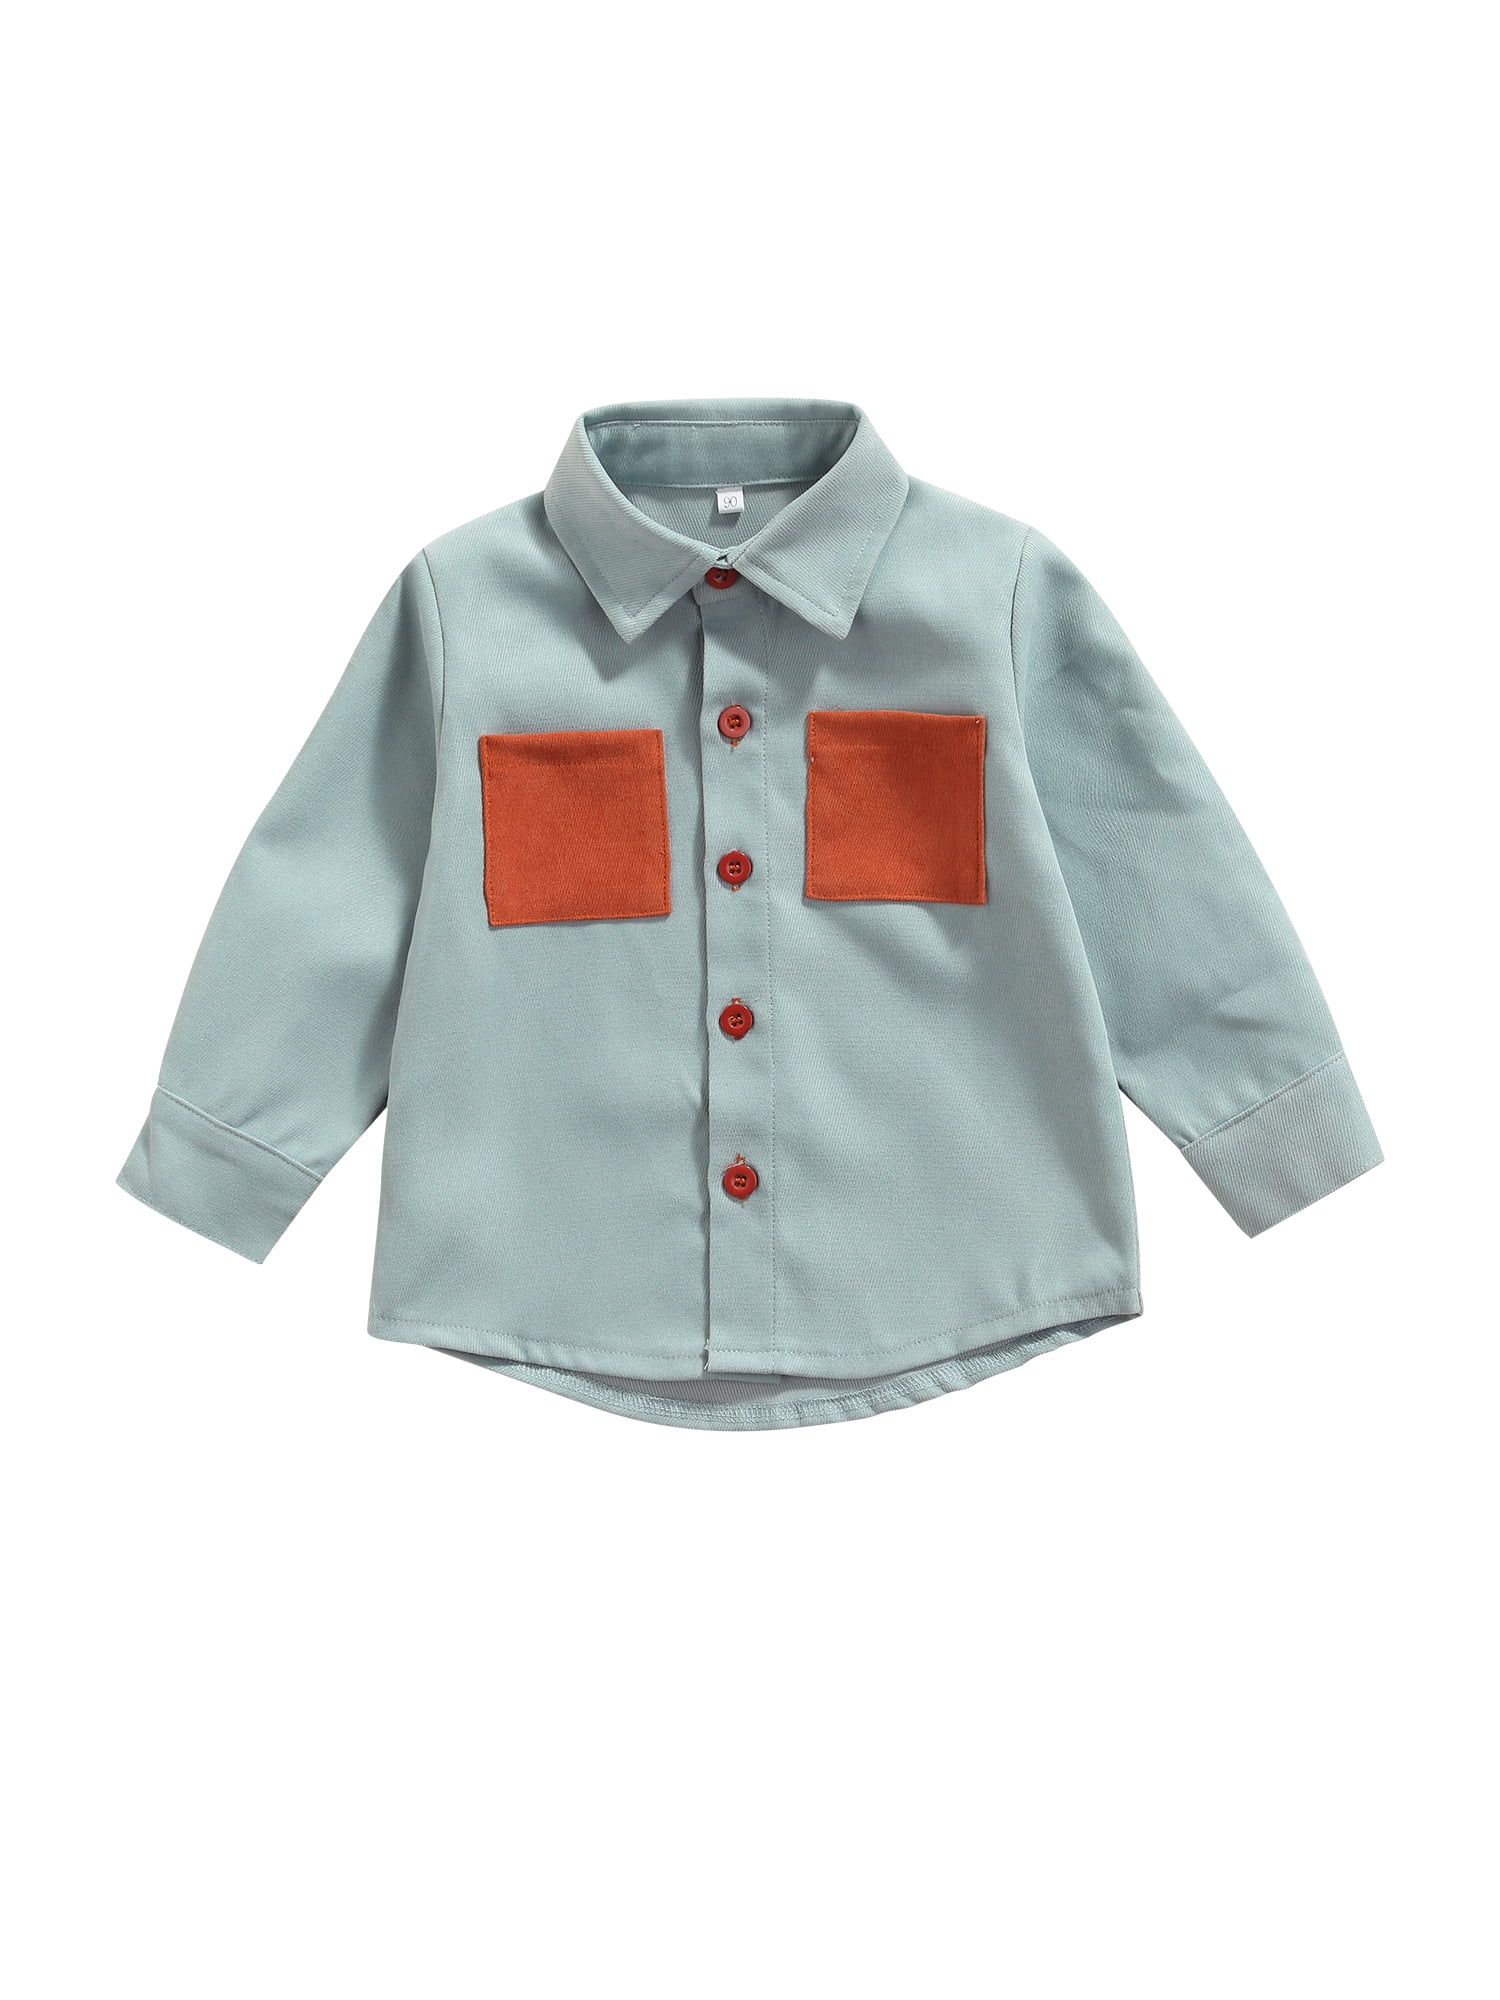 Kids Toddler Boy Clothes Long Sleeve Corduroy Lapel Button Down Shirt Thermal Top Little Boys Shirts Fall Jacket